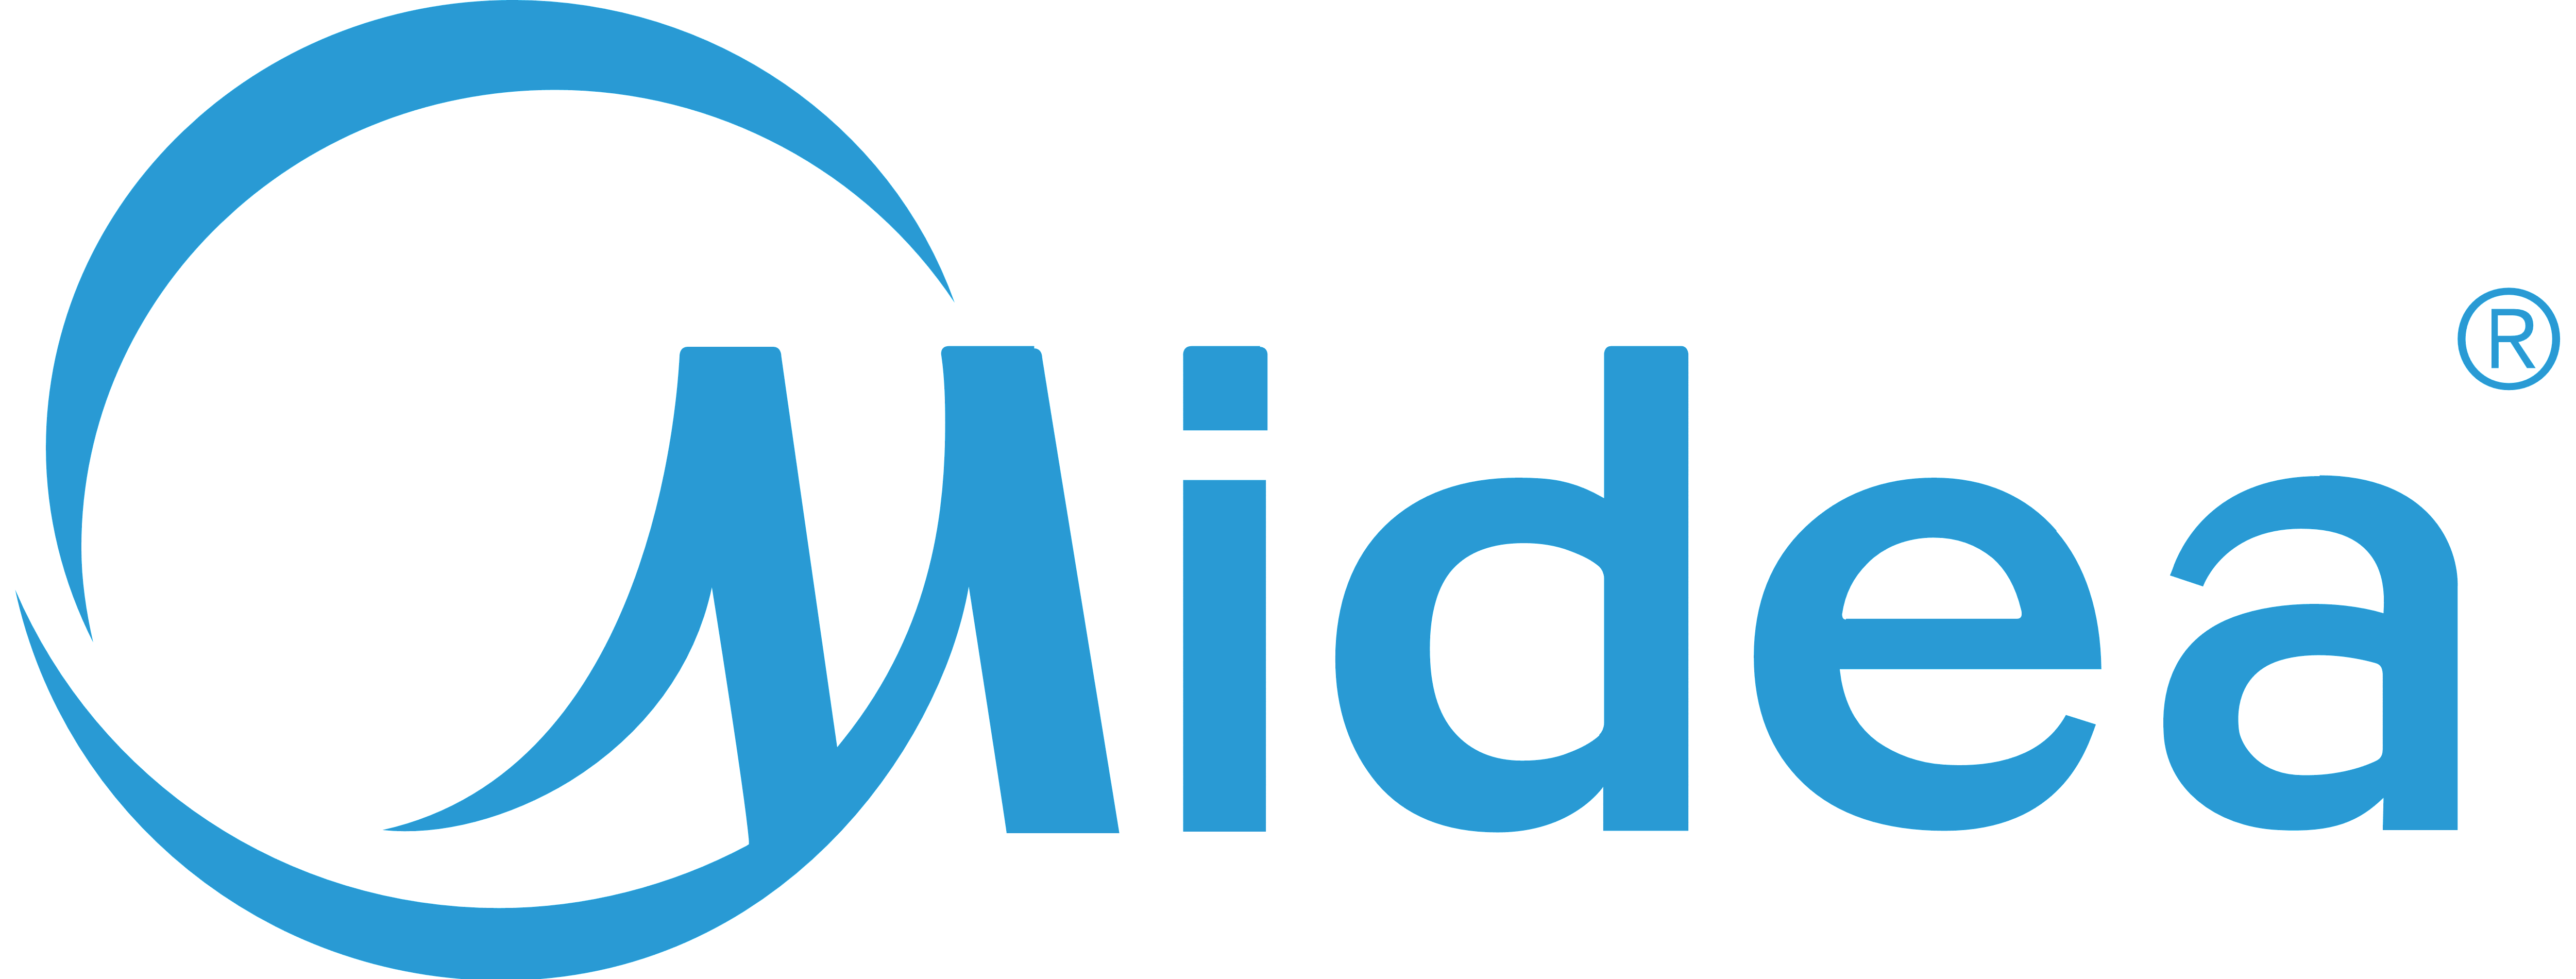 Midea Logo - Midea – Logos Download